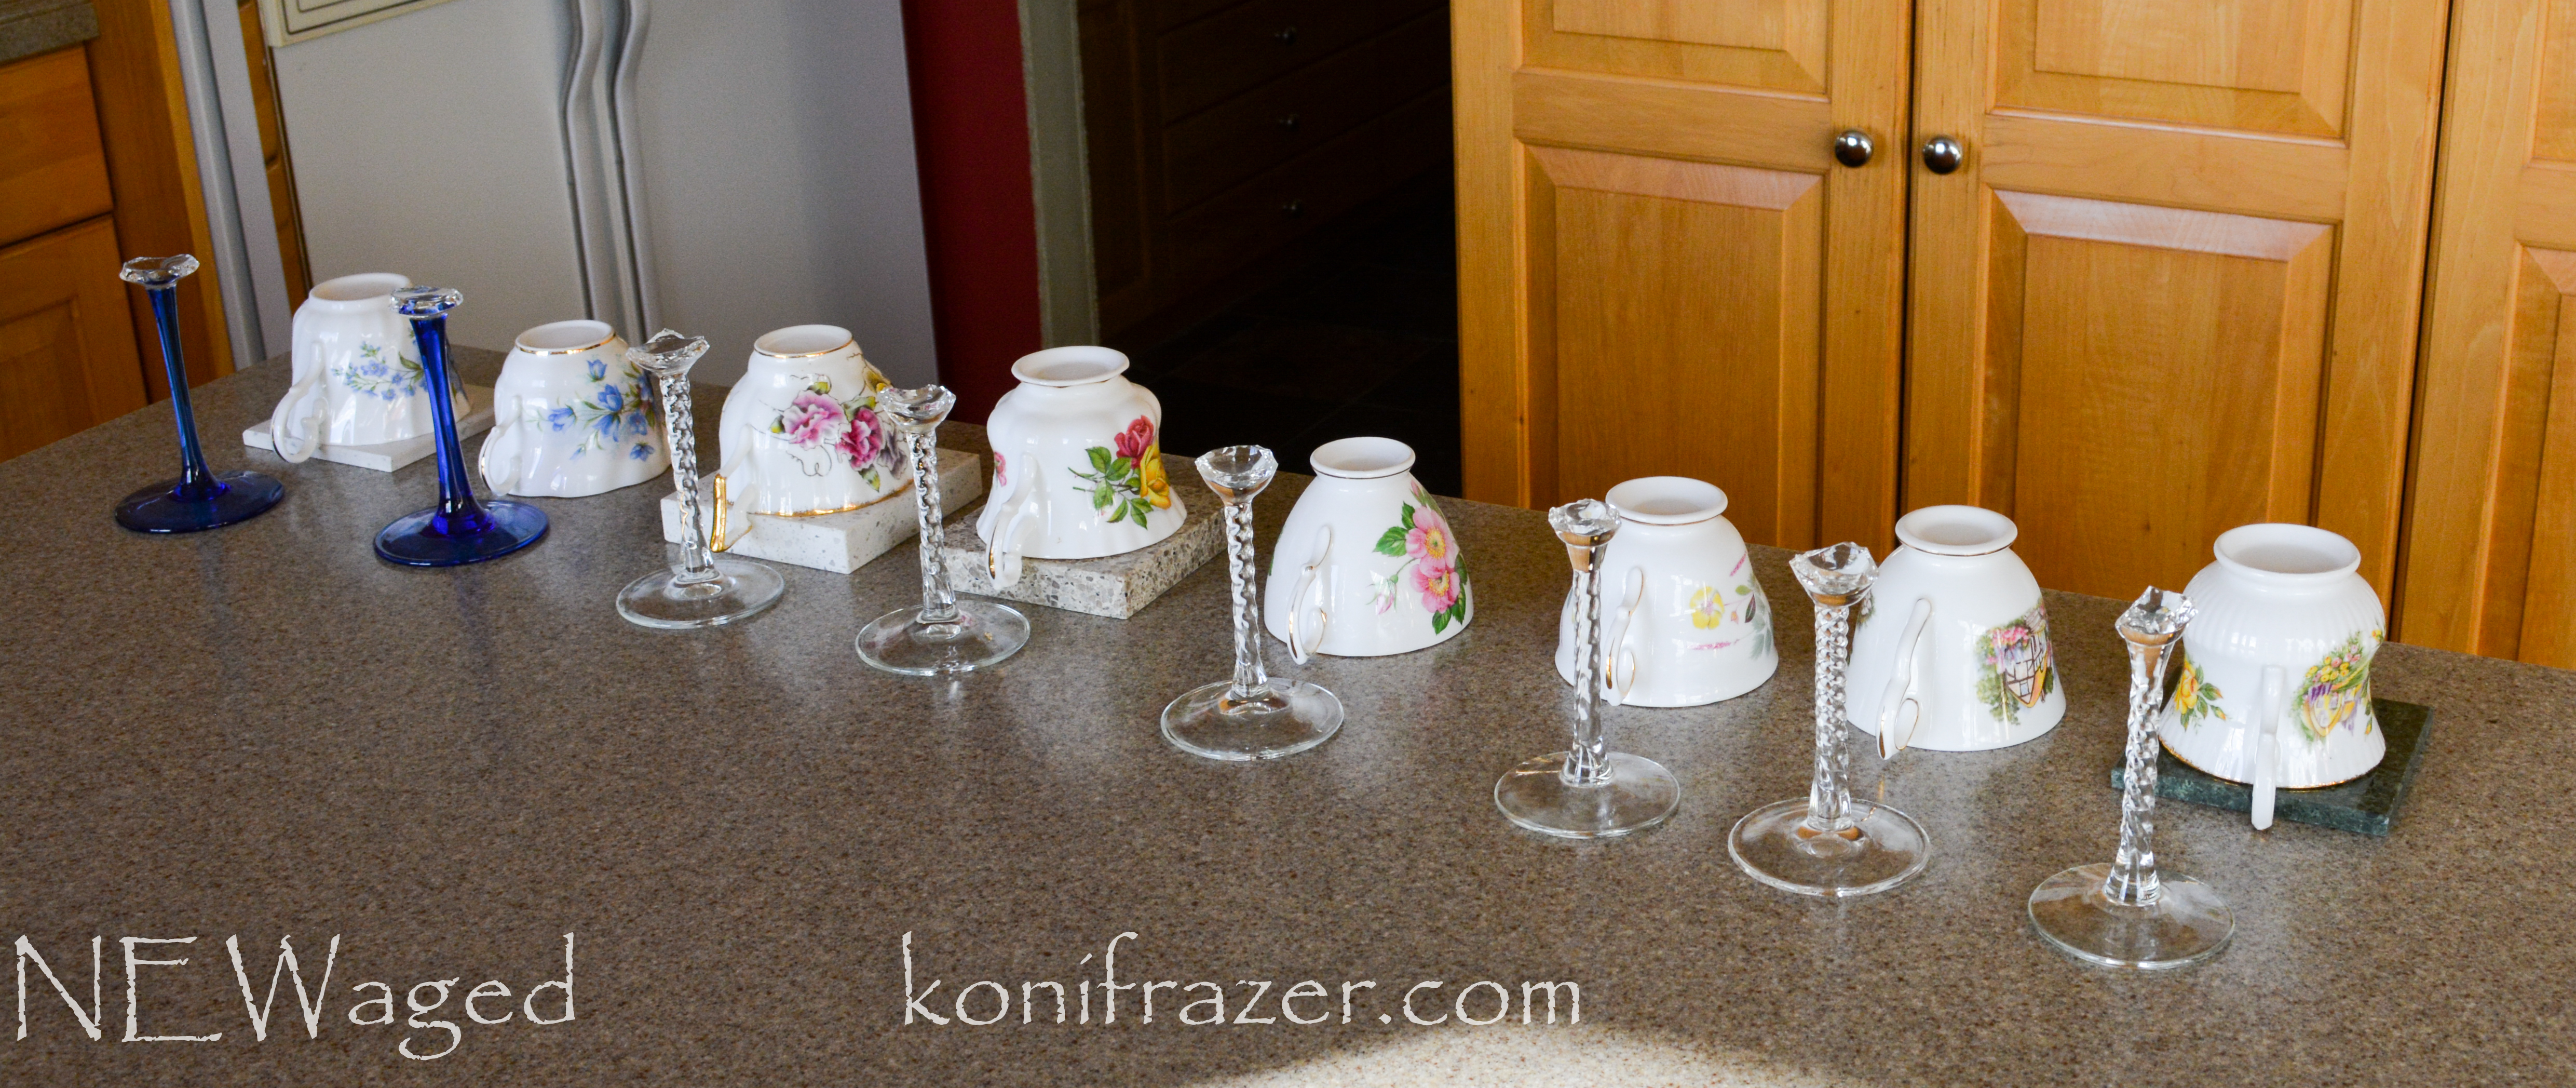 http://www.konifrazer.com/wp-content/uploads/2014/10/Tea-cup-Wine-Glass-selection.jpg